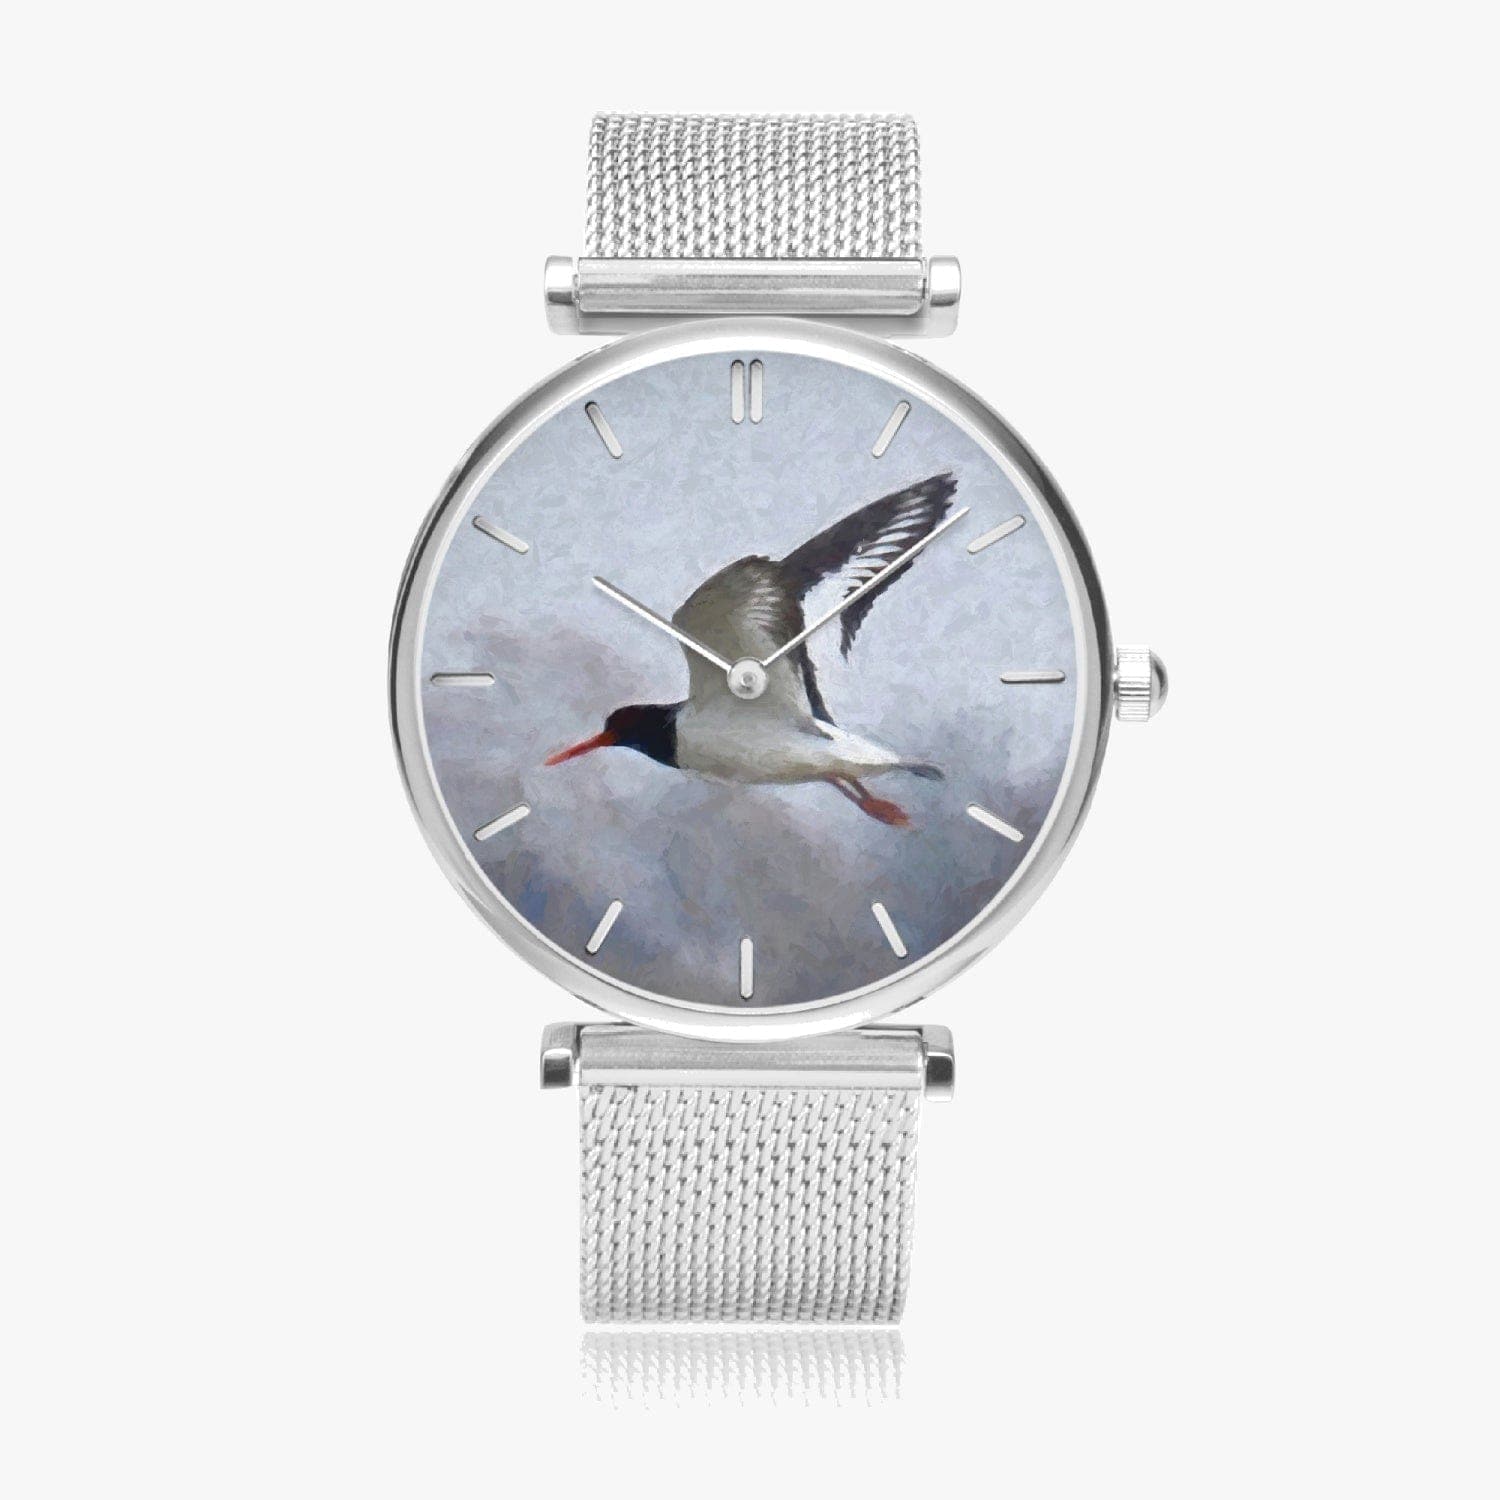 Time flies. New Stylish Ultra-Thin Quartz Watch (With Indicators), by Sensus Studio Design